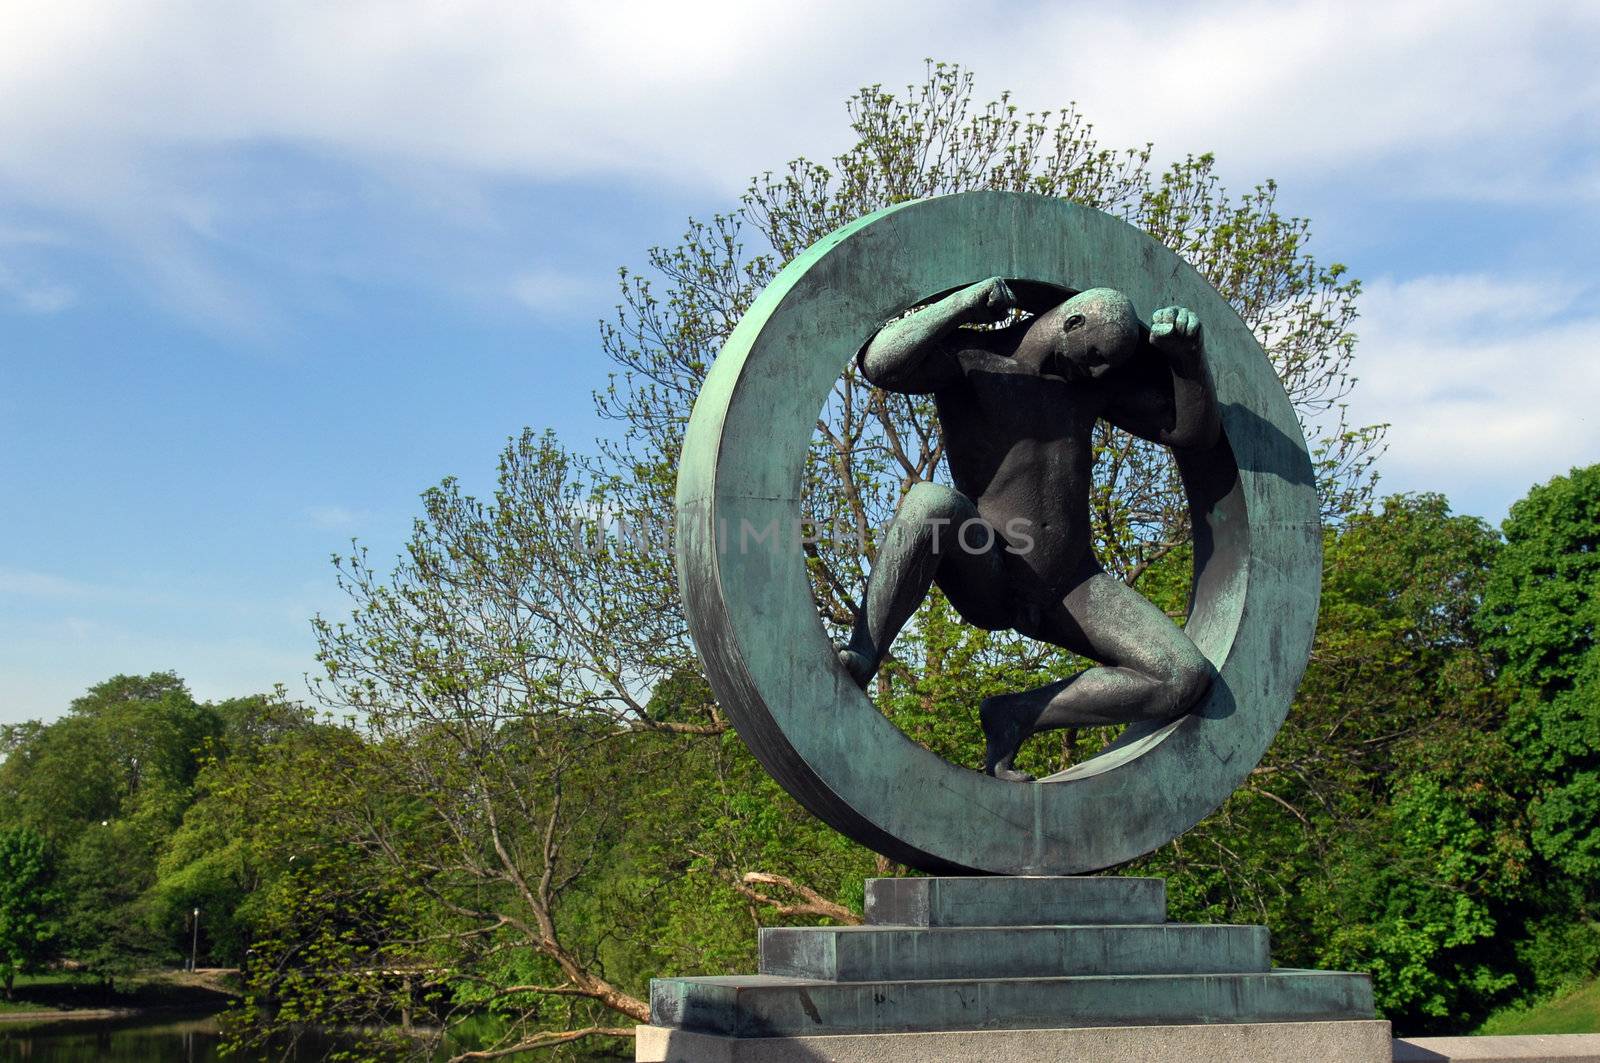 bronze sculpture of a man inside the wheel in Vigeland park, Oslo